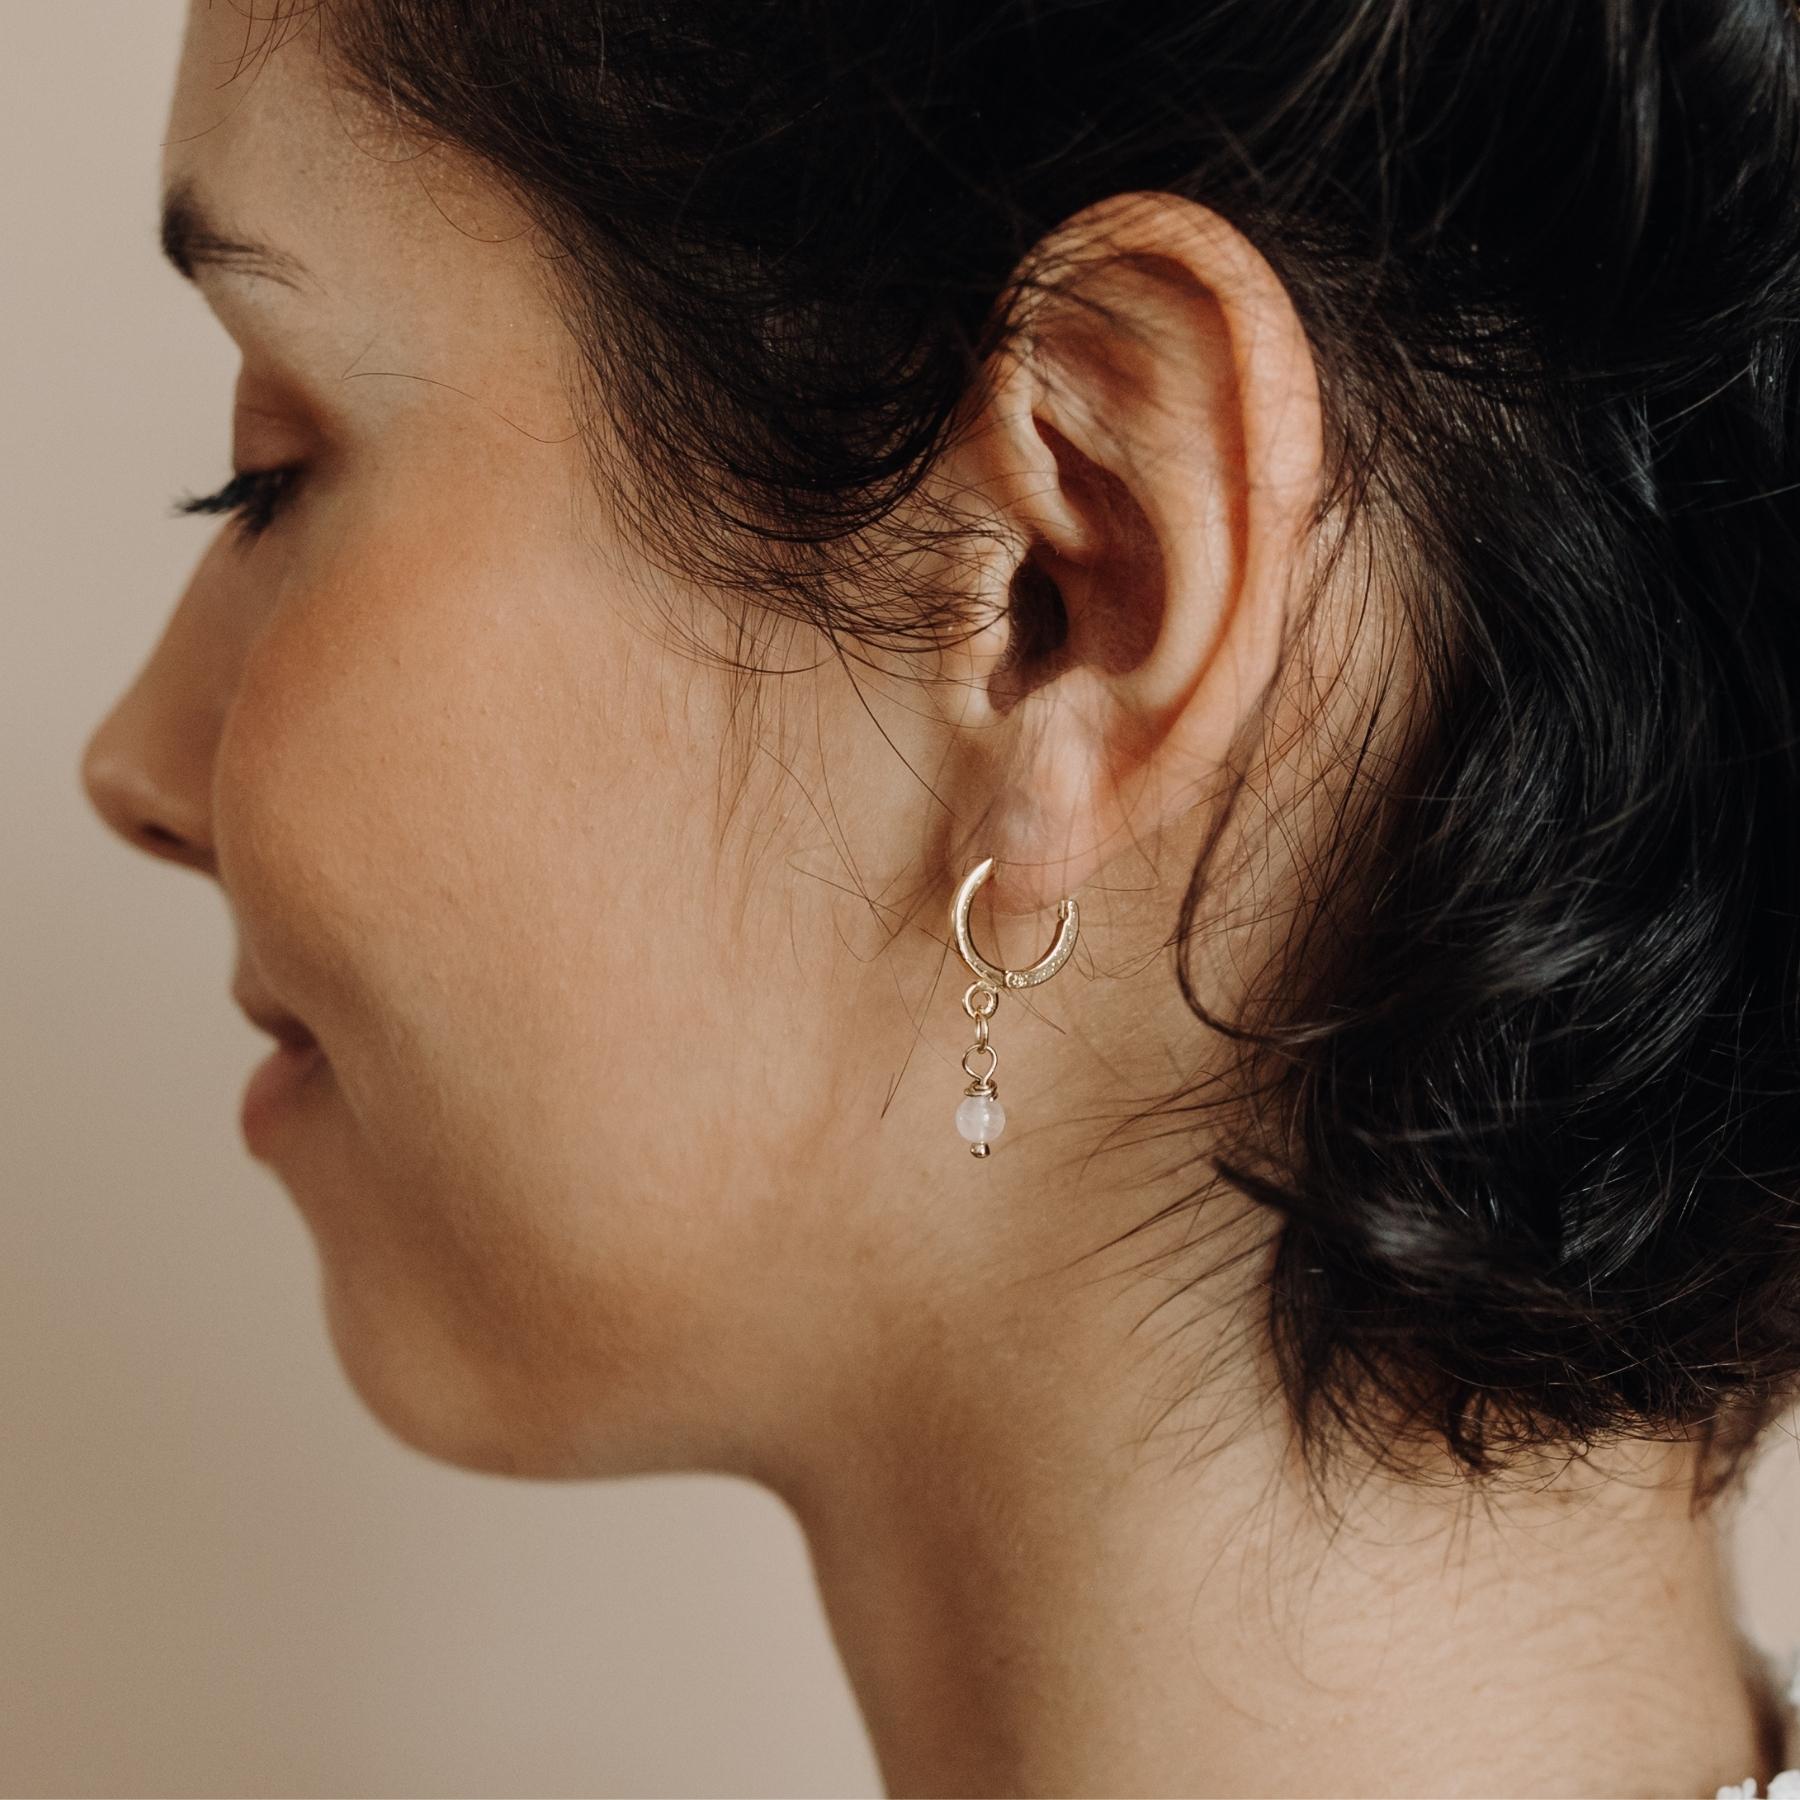 French-made engraved silver hoop earrings Designer earrings